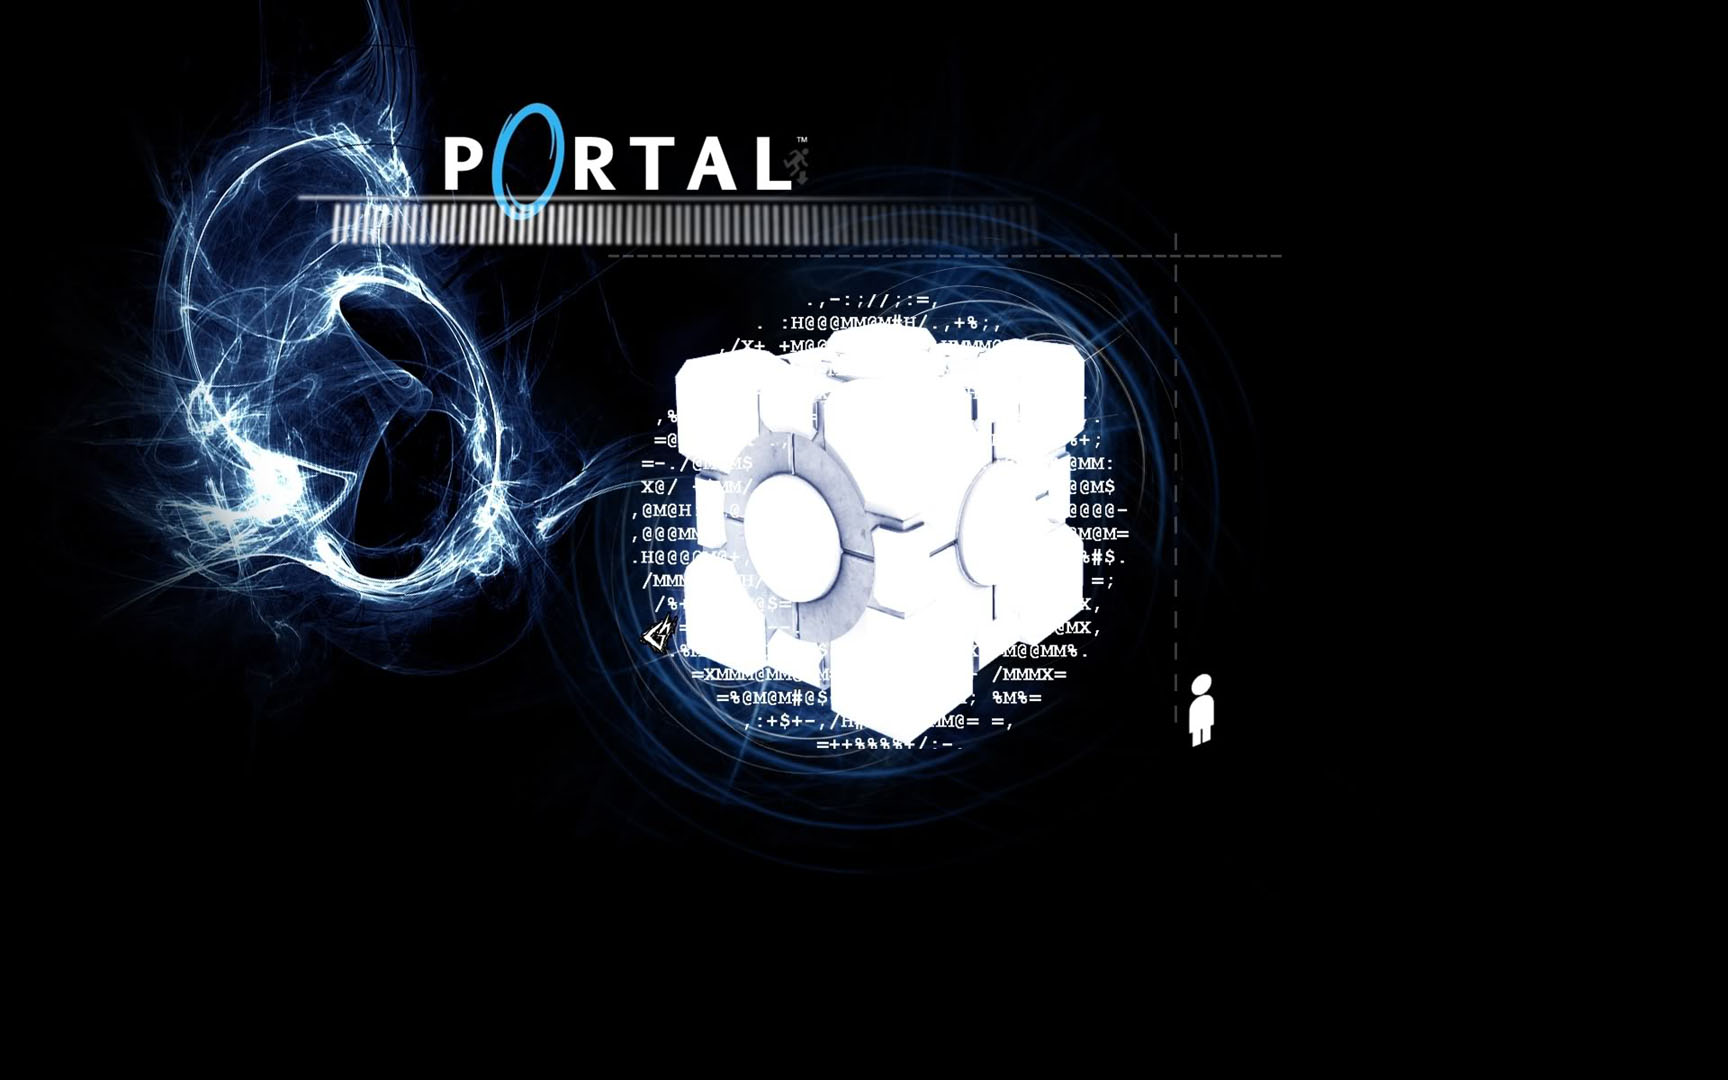 Hd Portal 2 Wallpapers